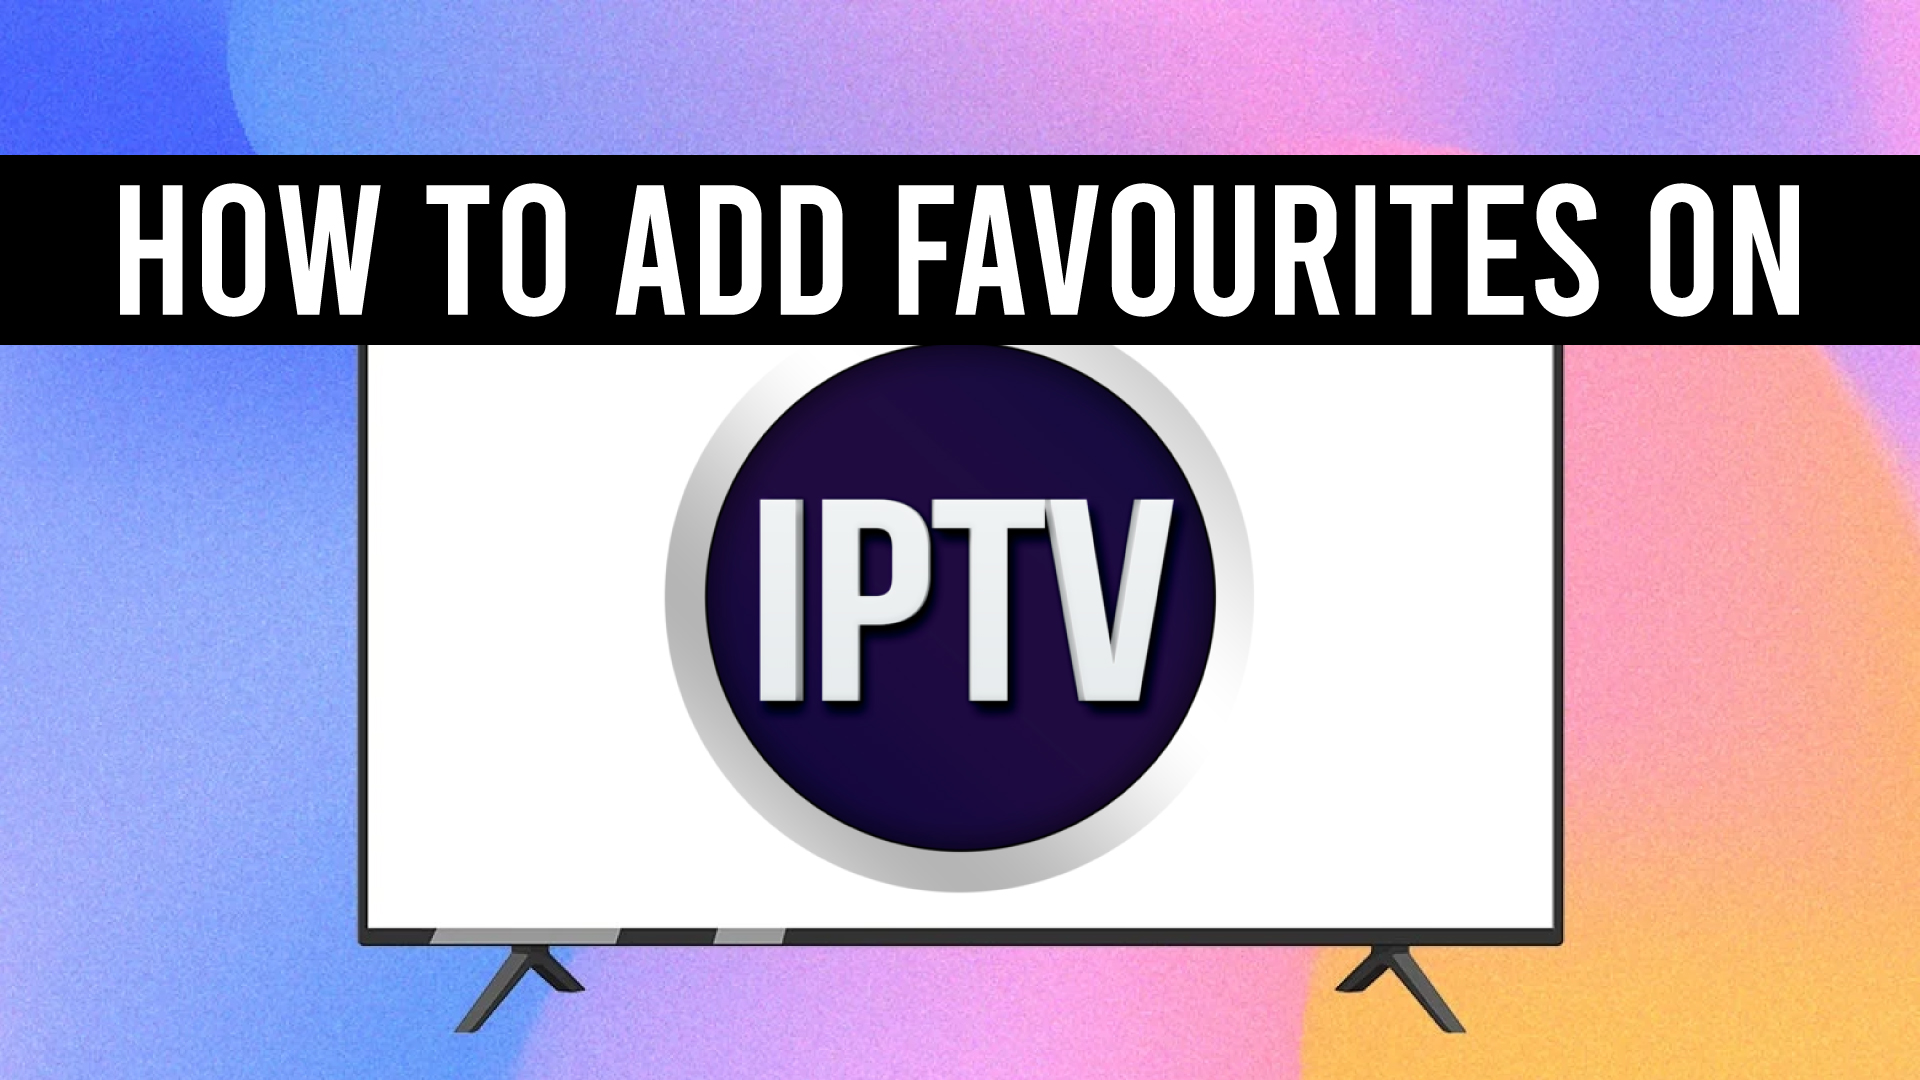 Add Favorite Channels on IPTV